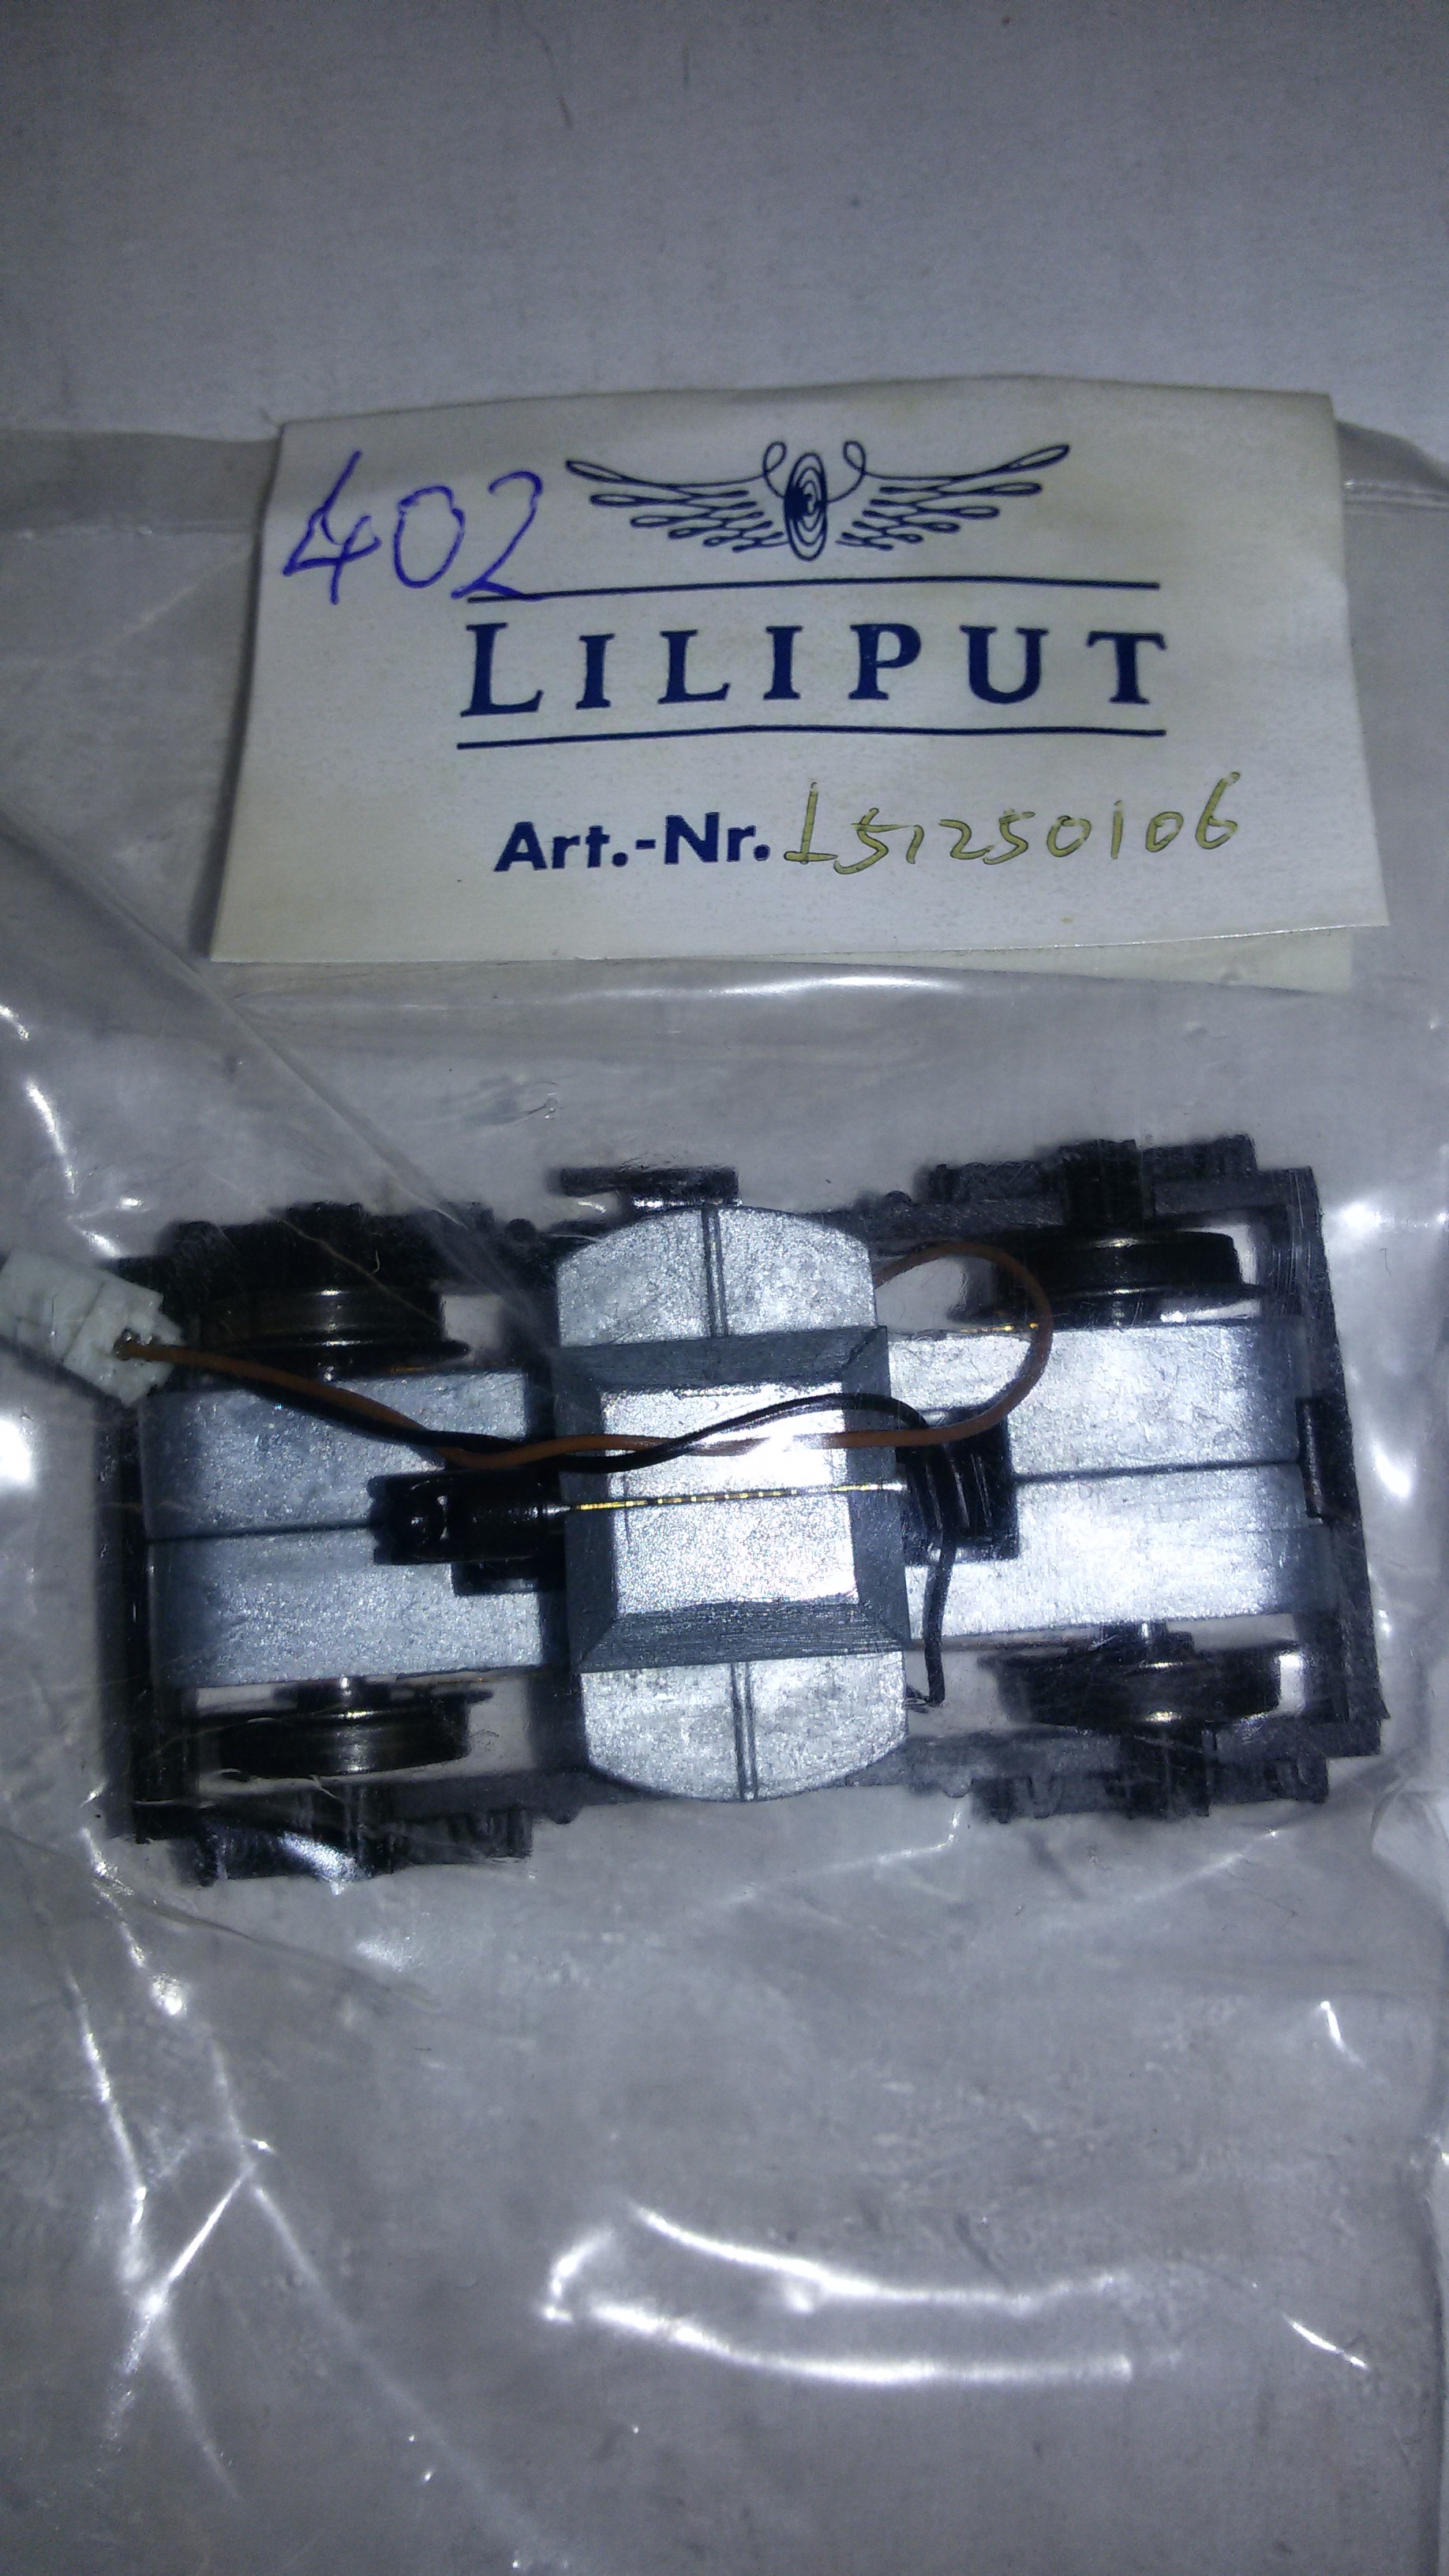 *LO 402* Liliput Ersatzteil L51250106 Drehgestell, Antrieb